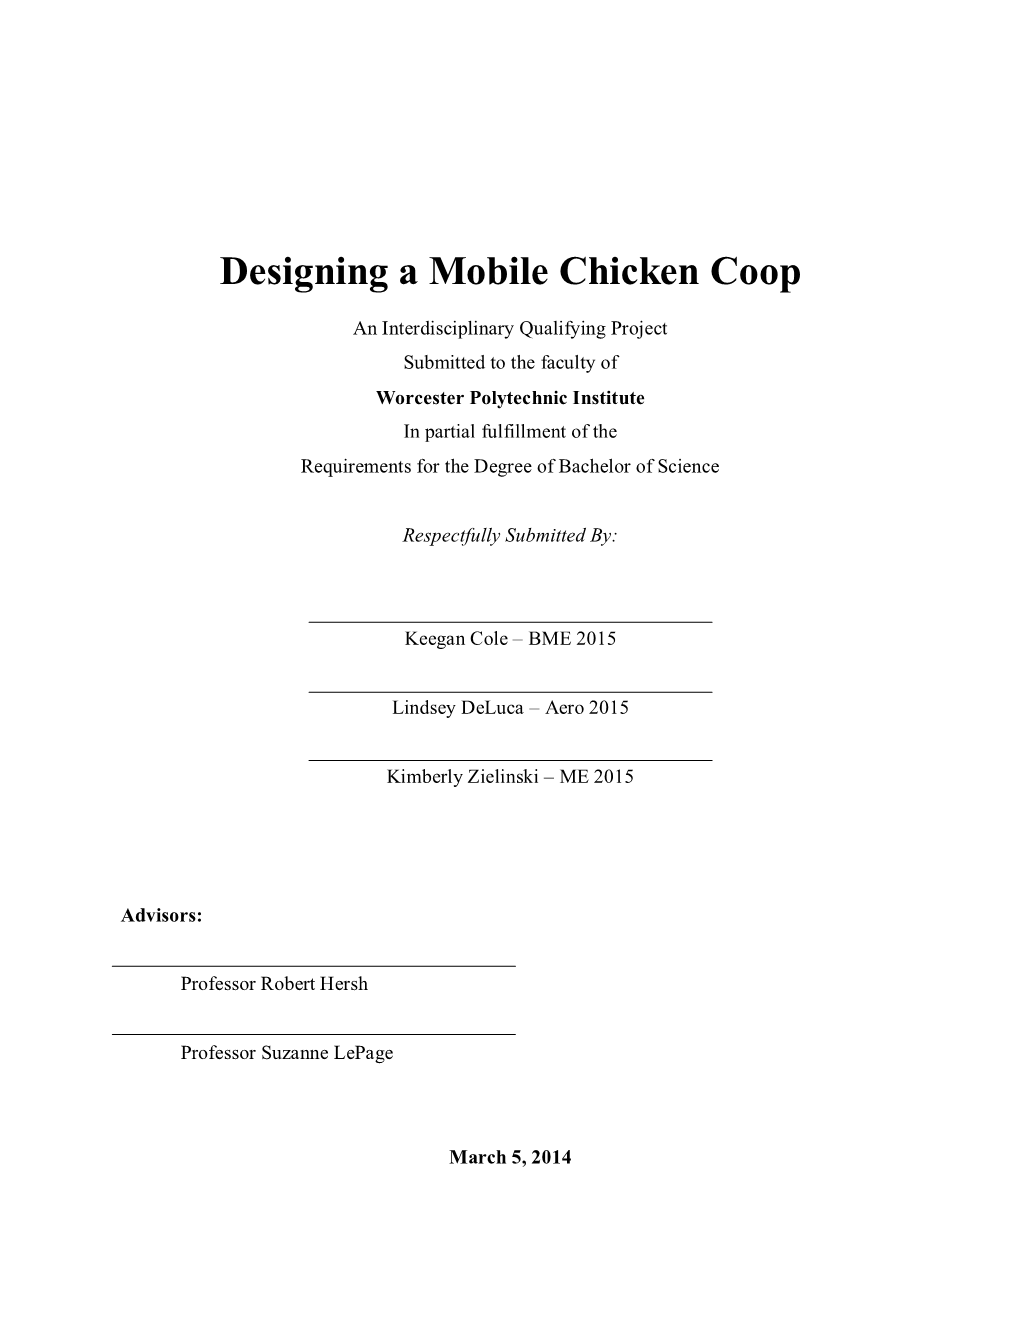 Designing a Mobile Chicken Coop